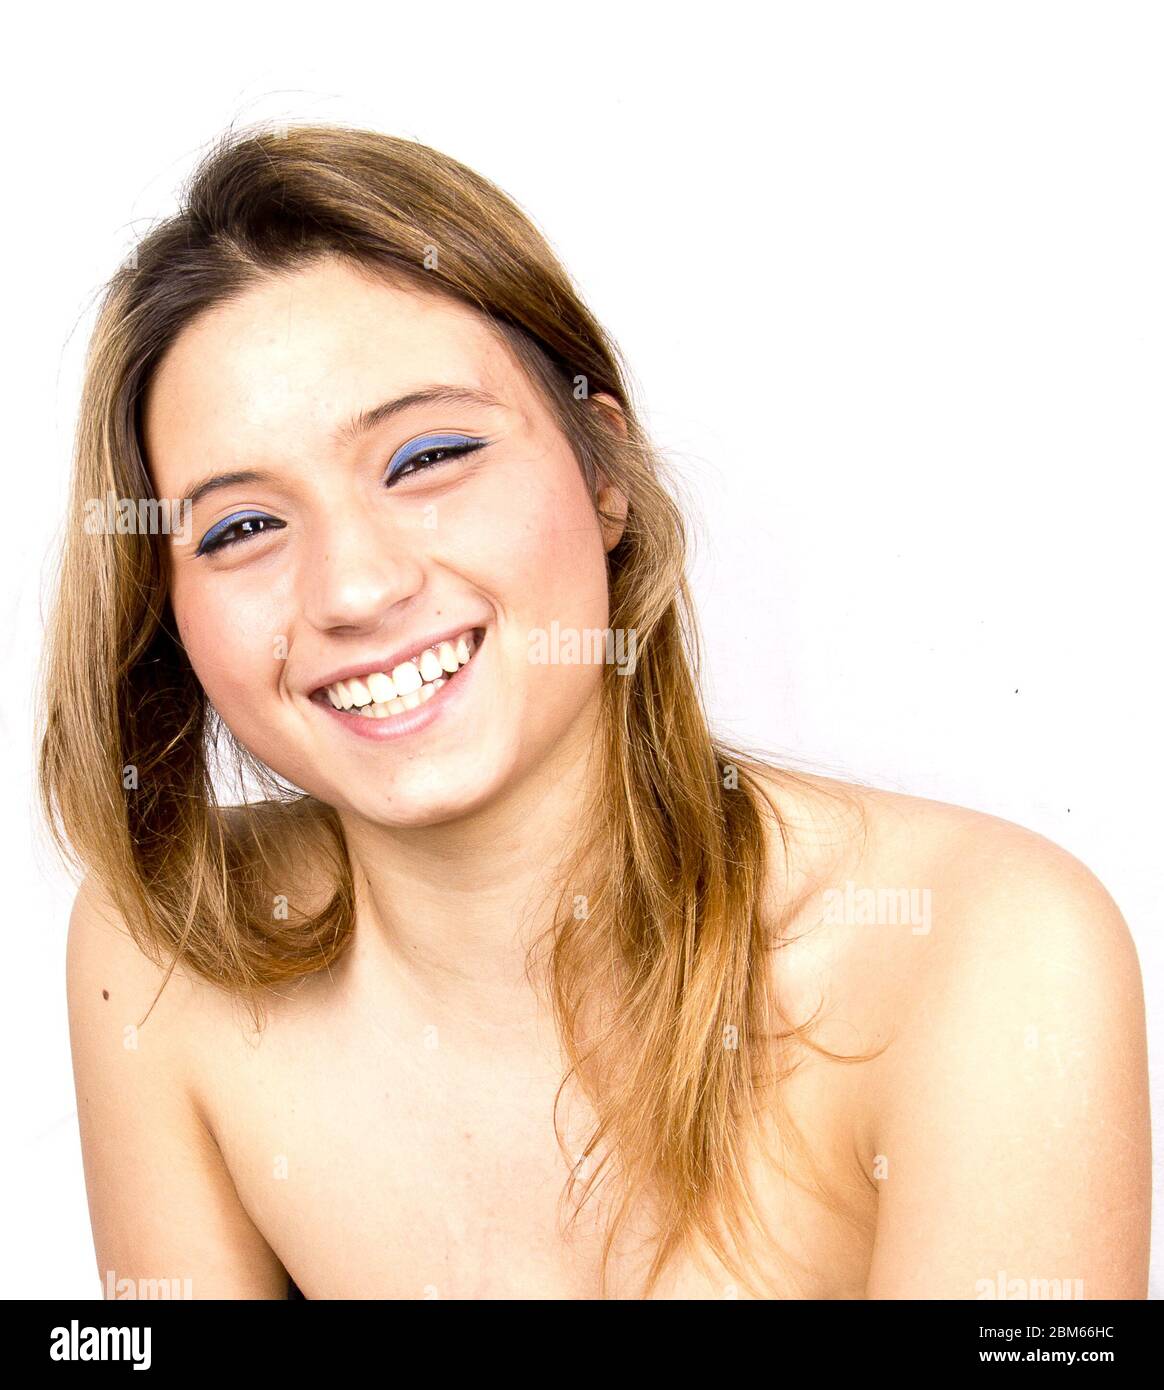 girl smiling Stock Photo